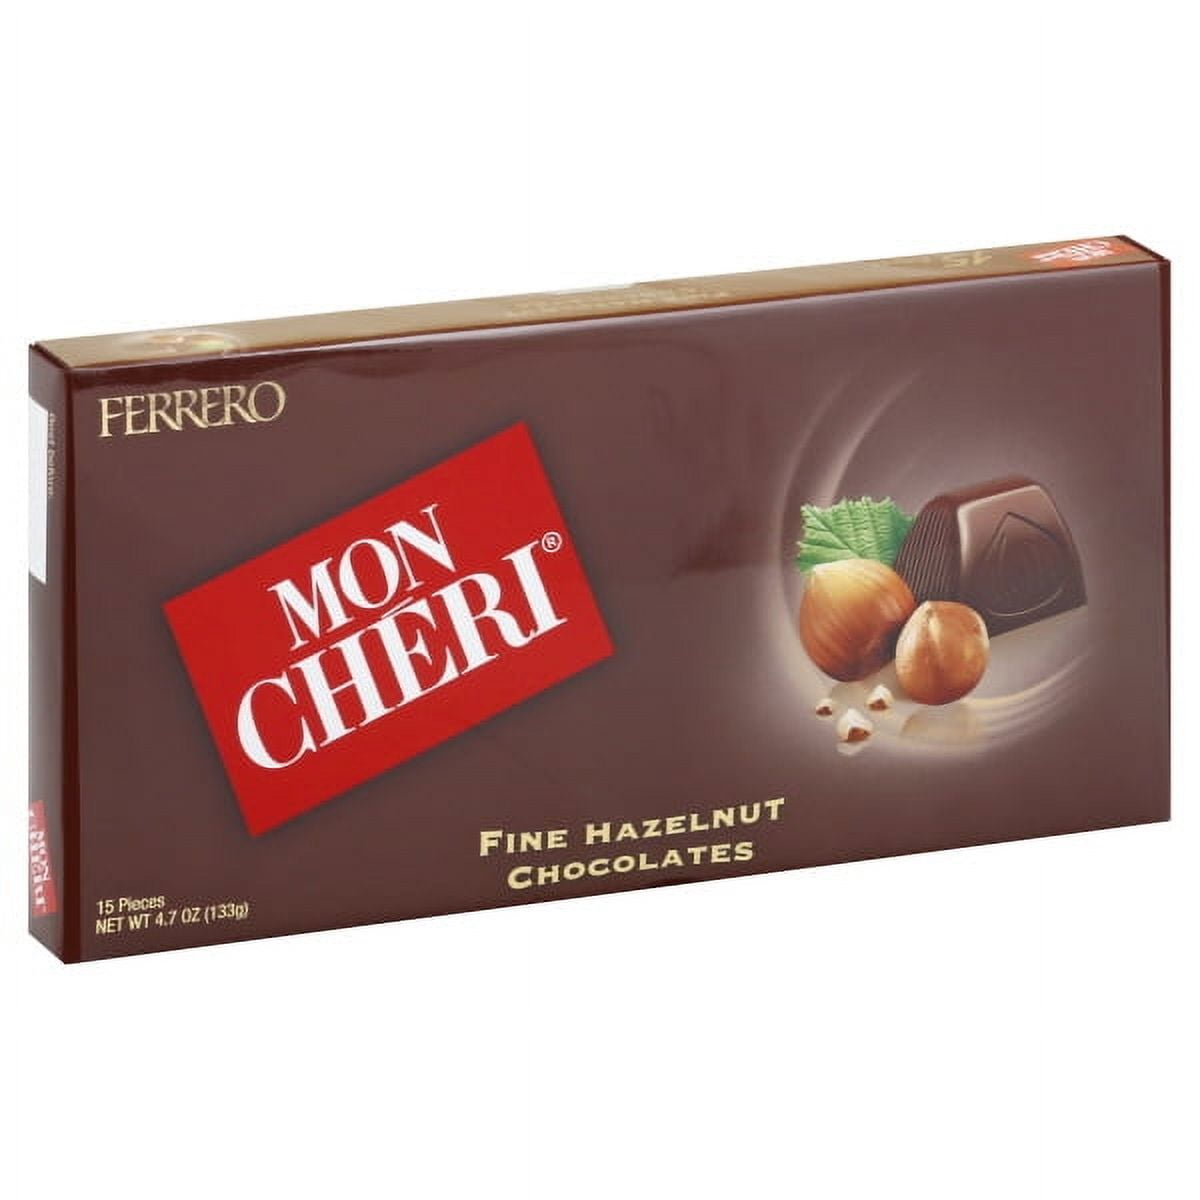 Buy Mon Cheri Chocolate Ferrero online